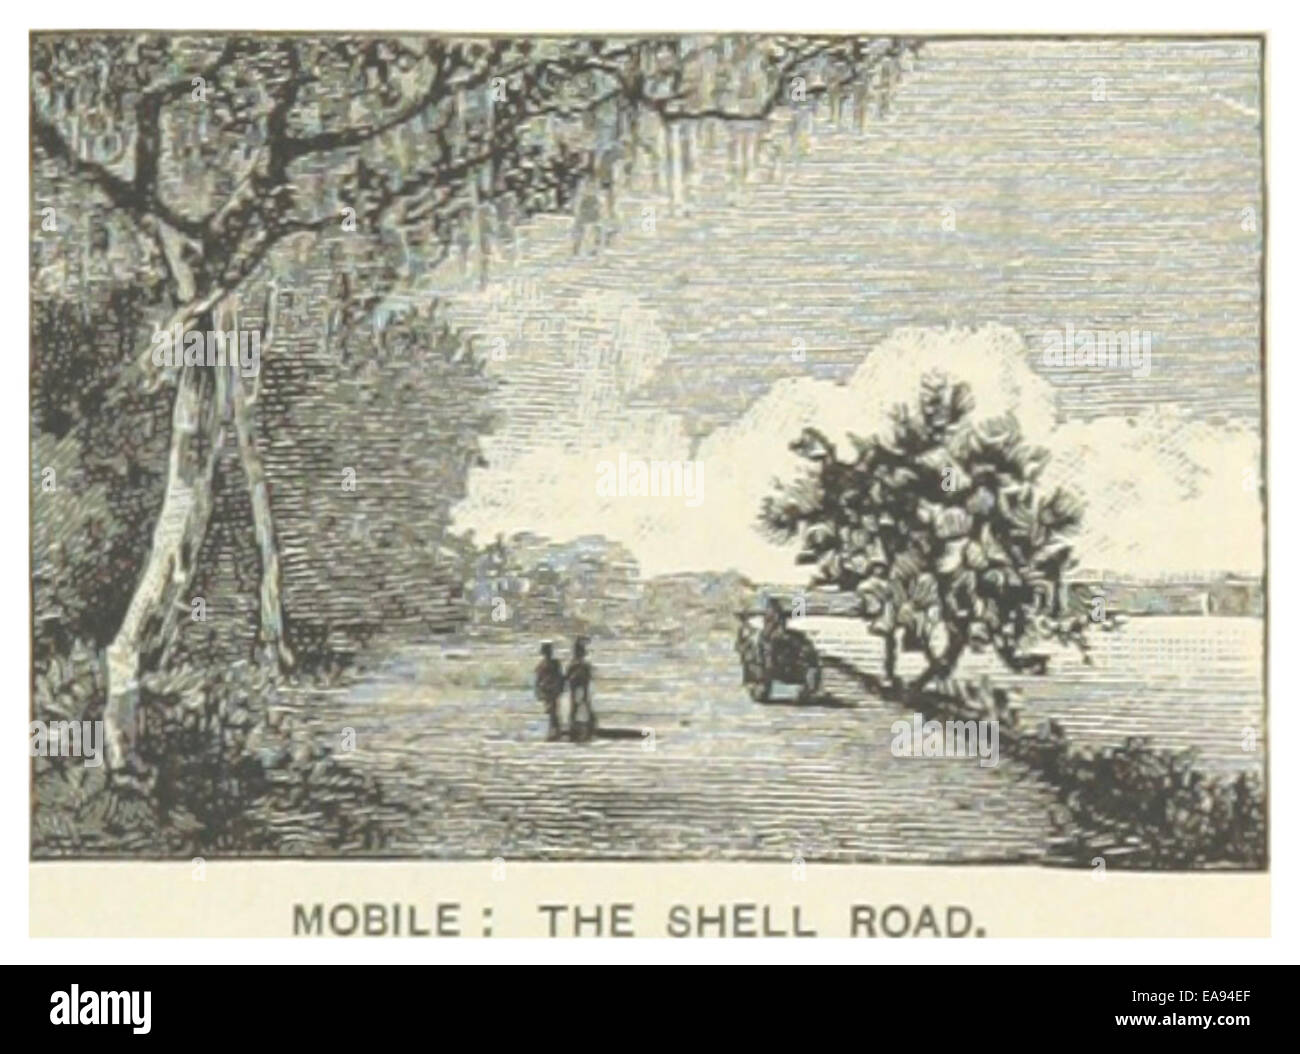 US-AL(1891) p031 MOBILE, THE SHELL ROAD Stock Photo